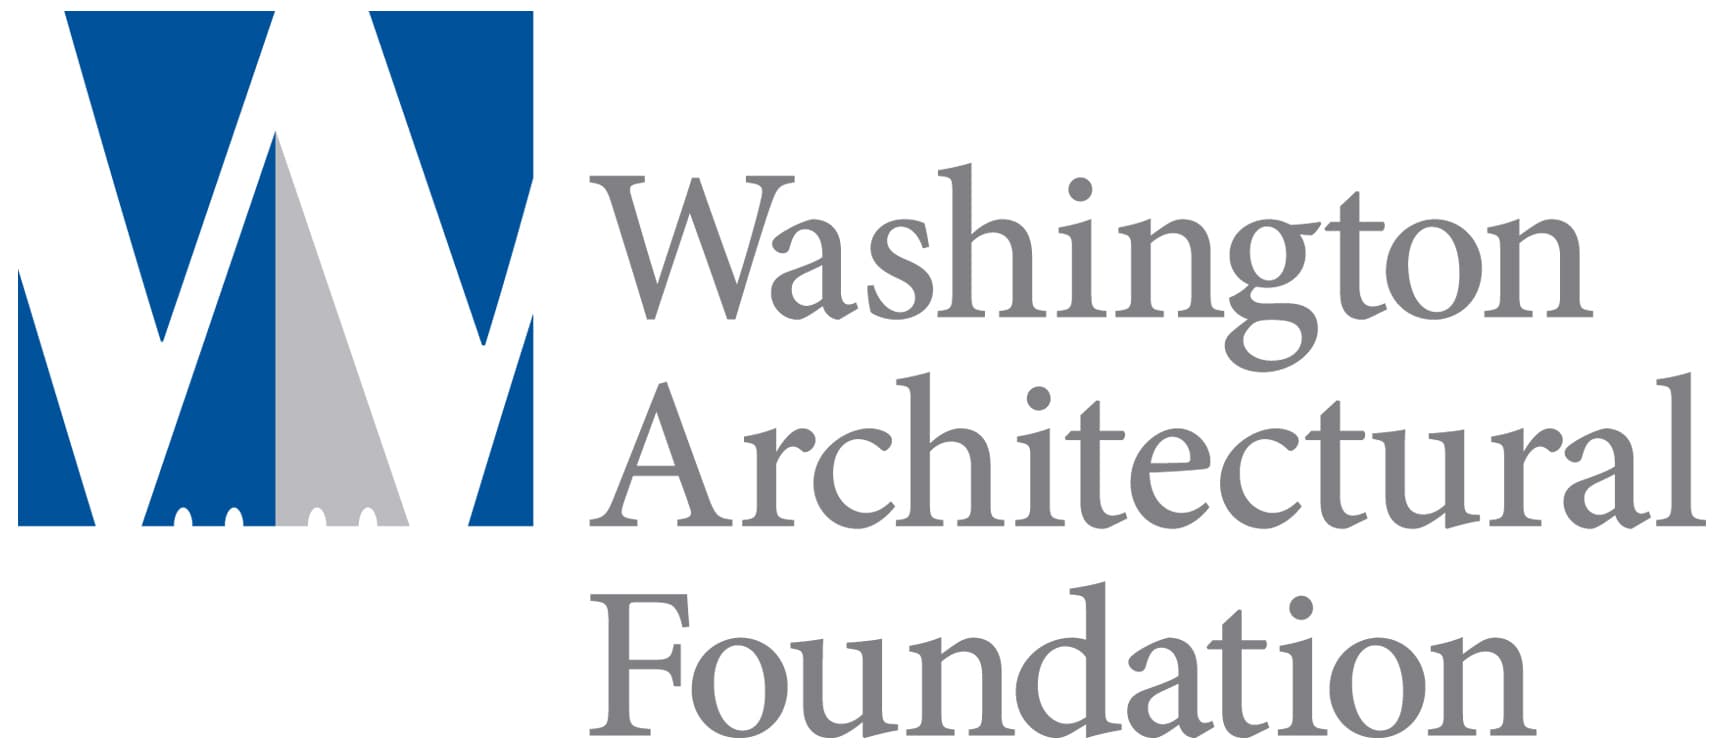 Washington Architectural Foundation